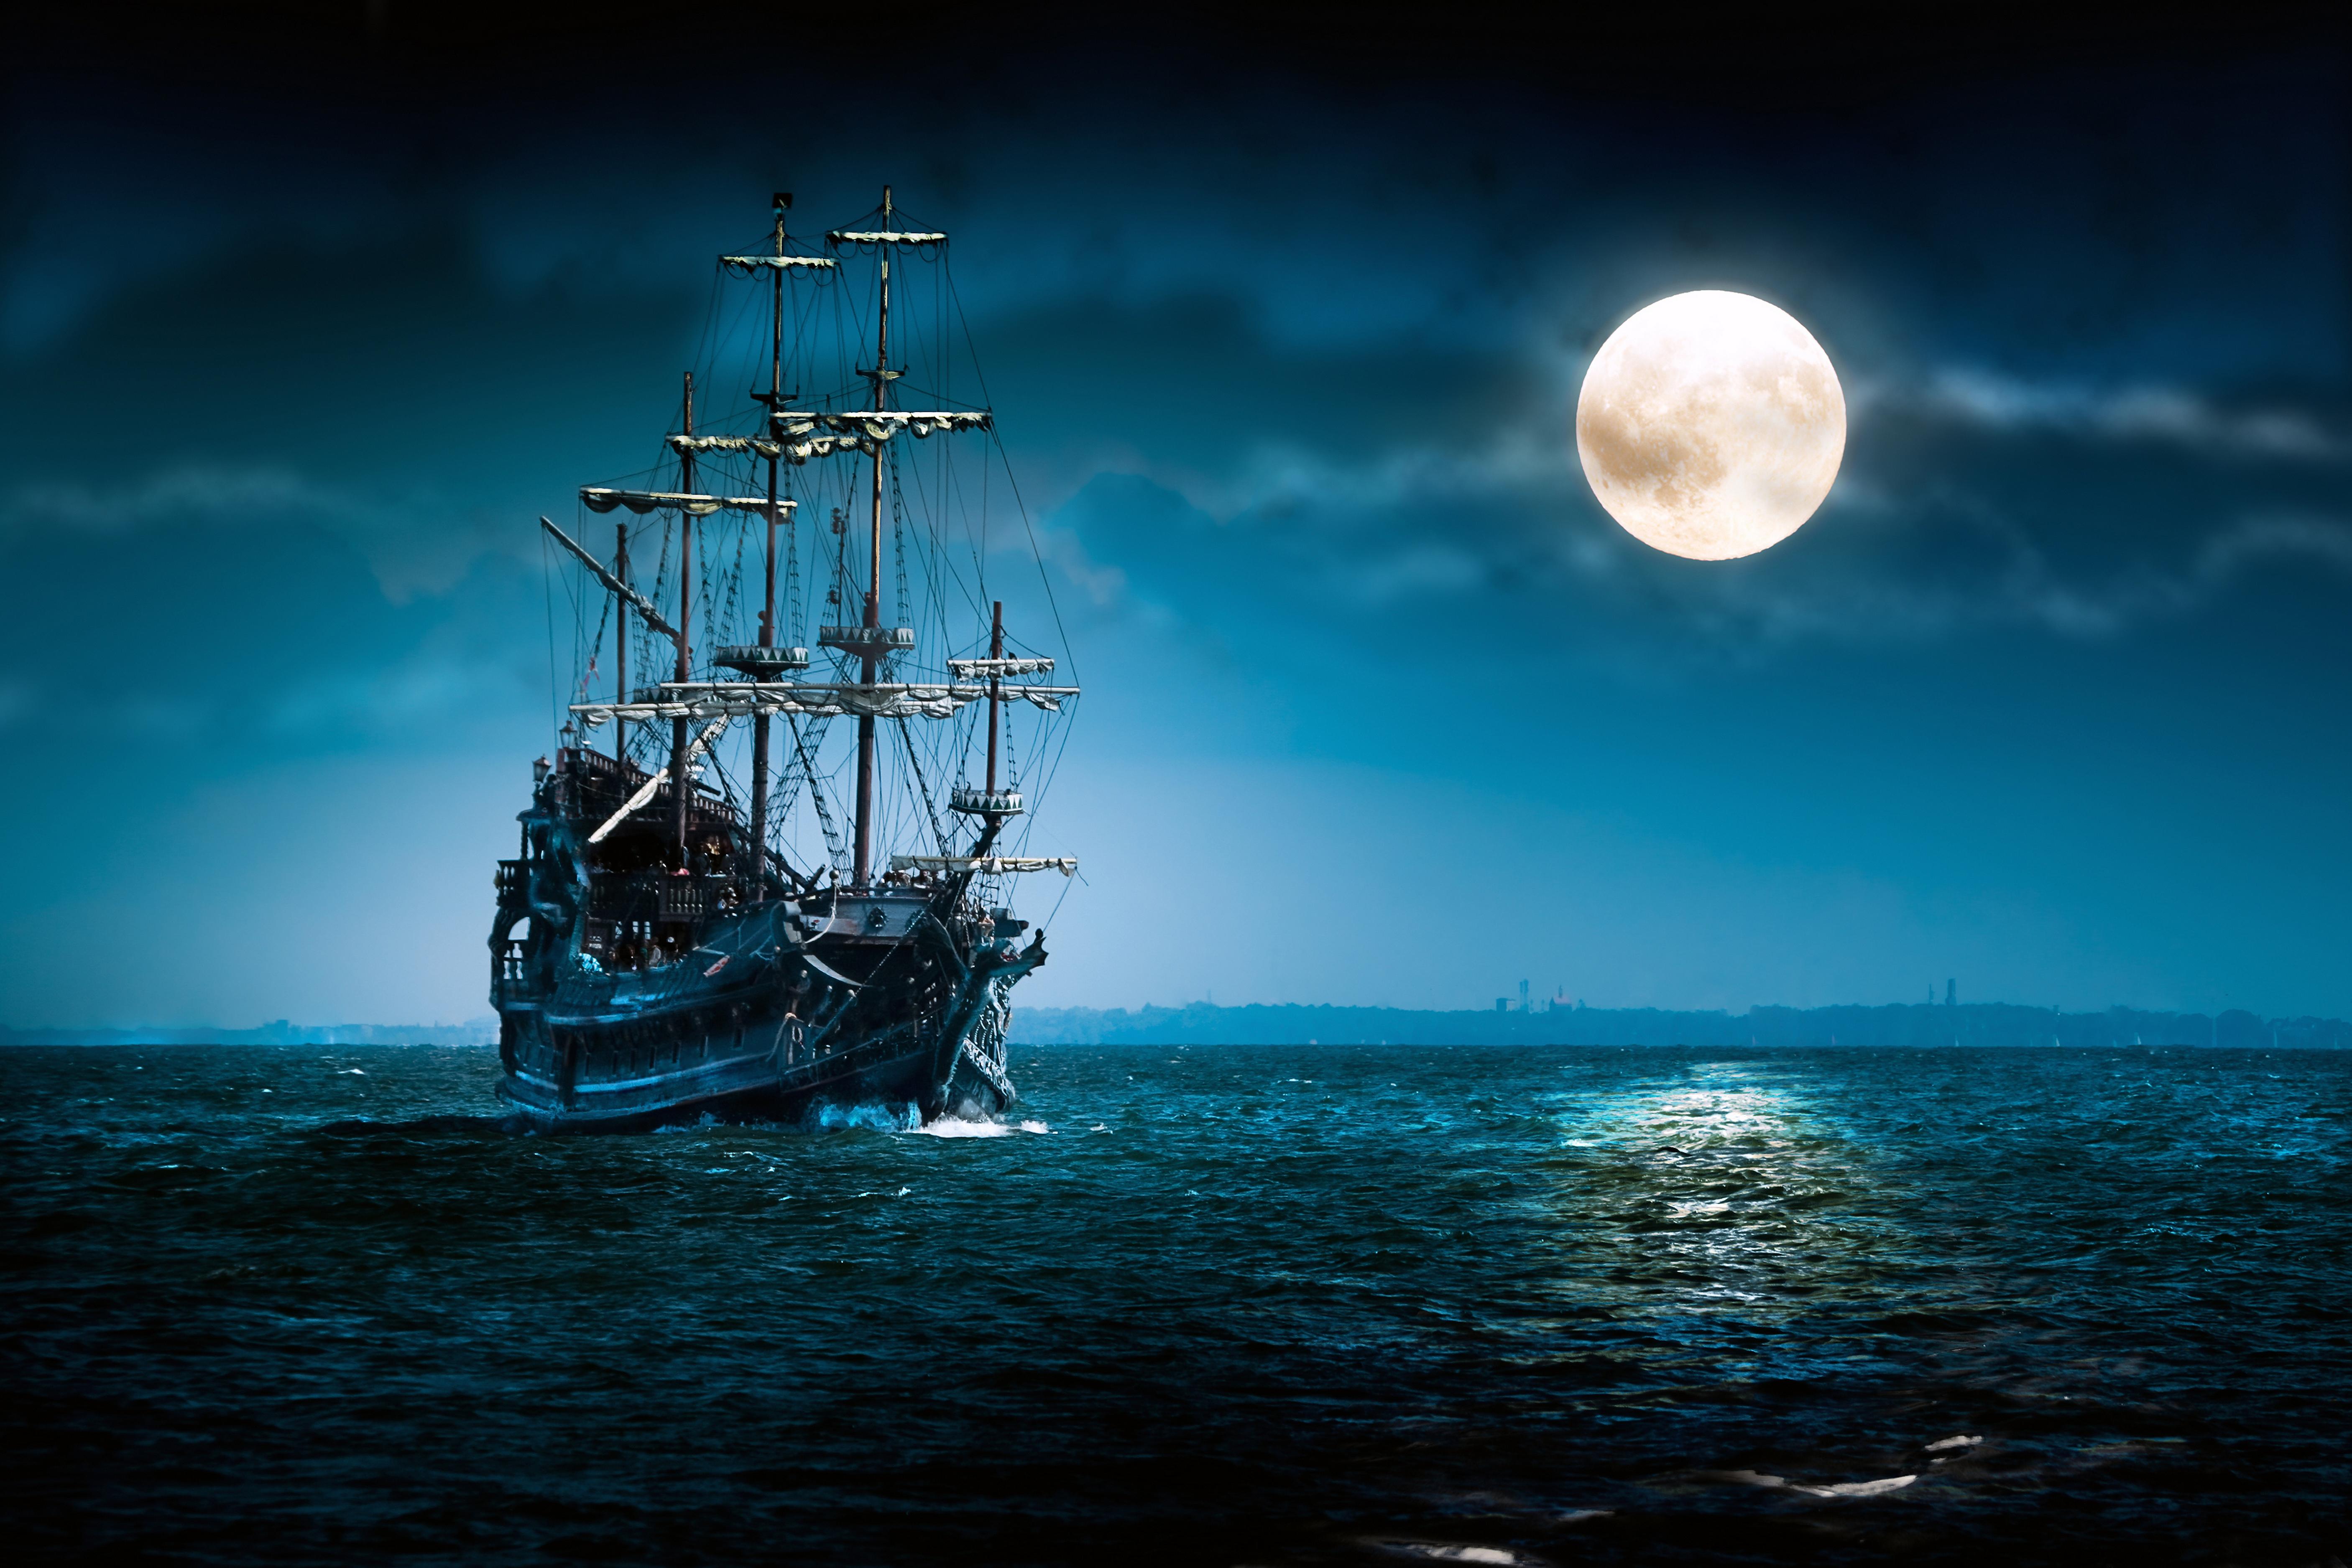 Pirate ships wallpaper